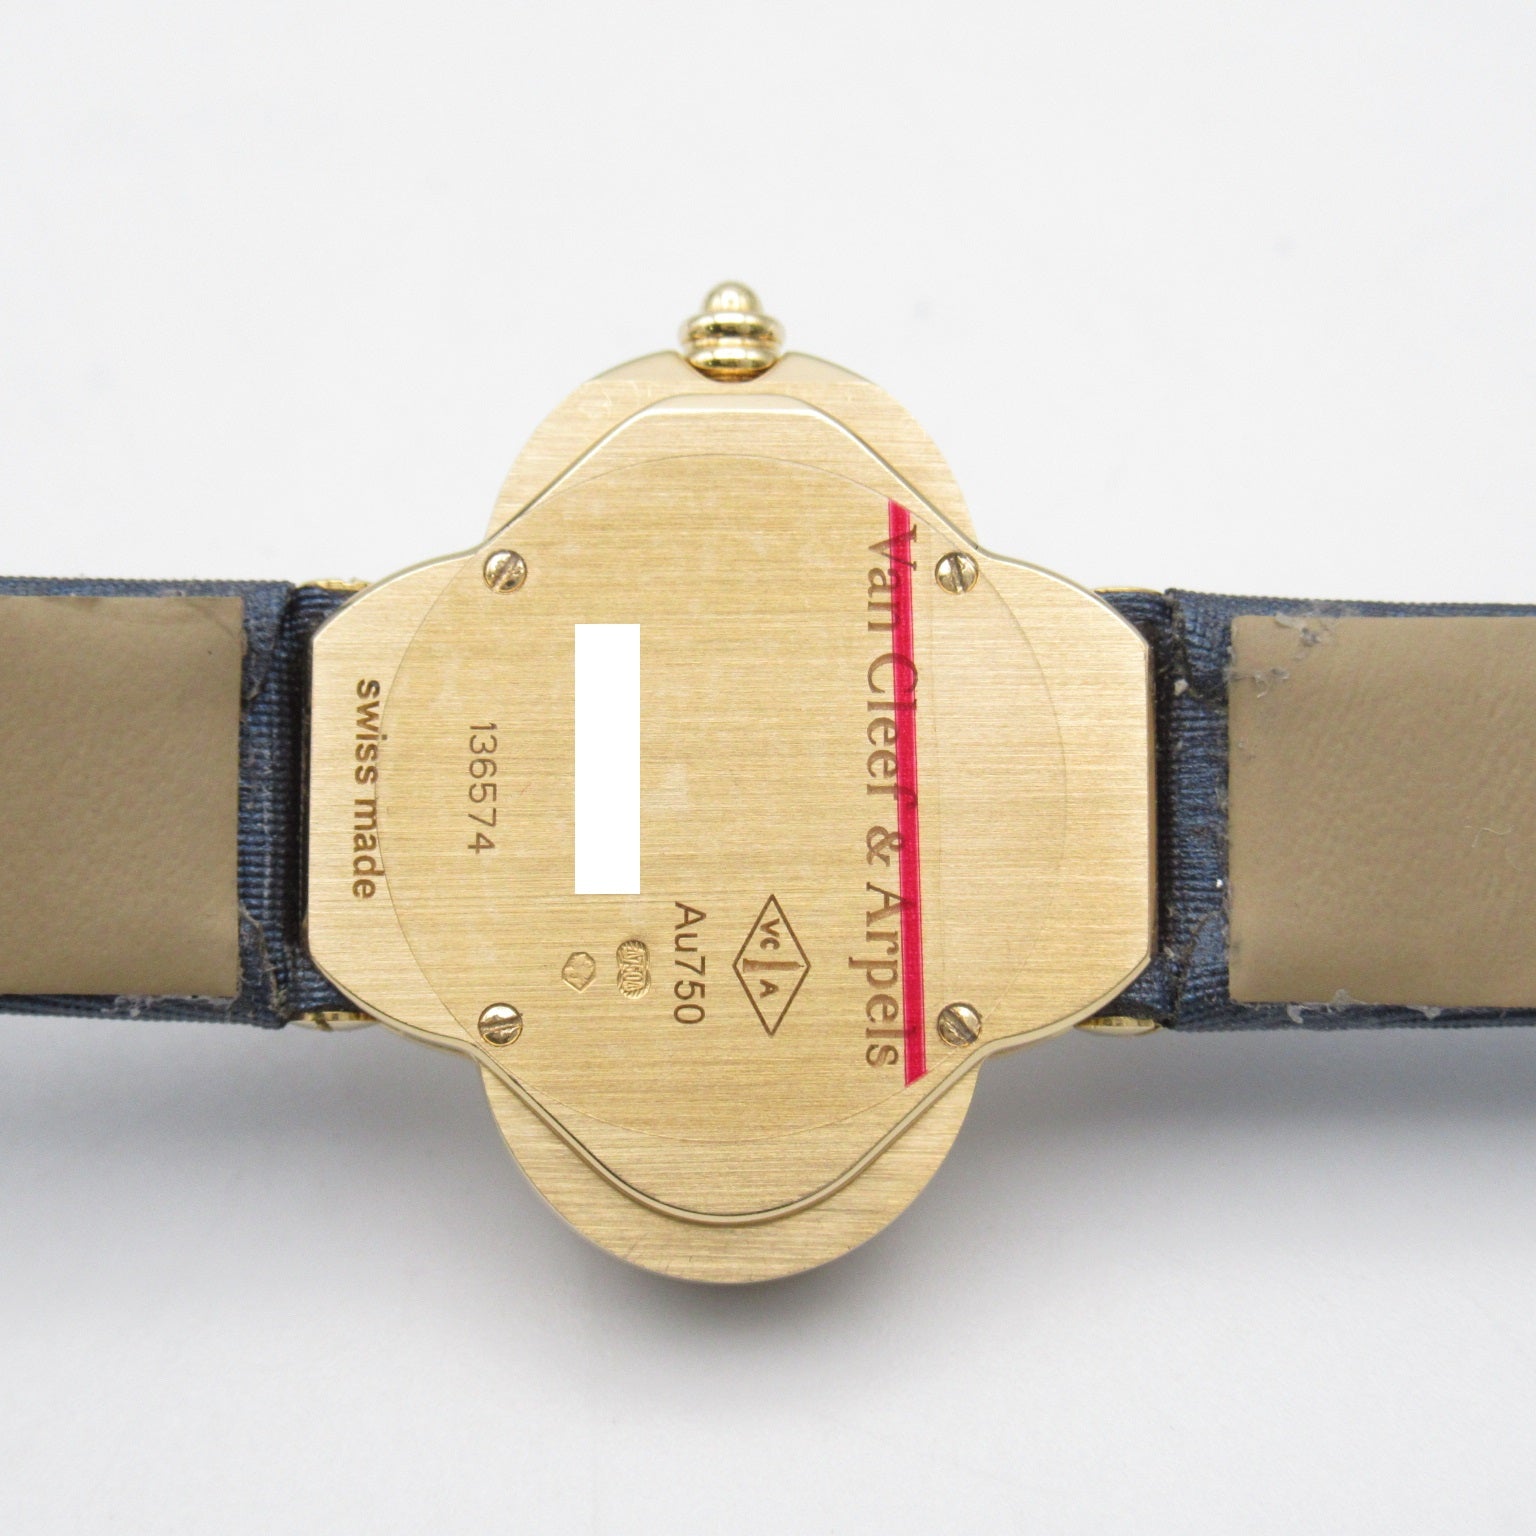 Van Cleef & Arpels Van Cleef & Arpels Alhambra Watch Watch K18 (yellow g) Leather Belt  White S VCARD22000